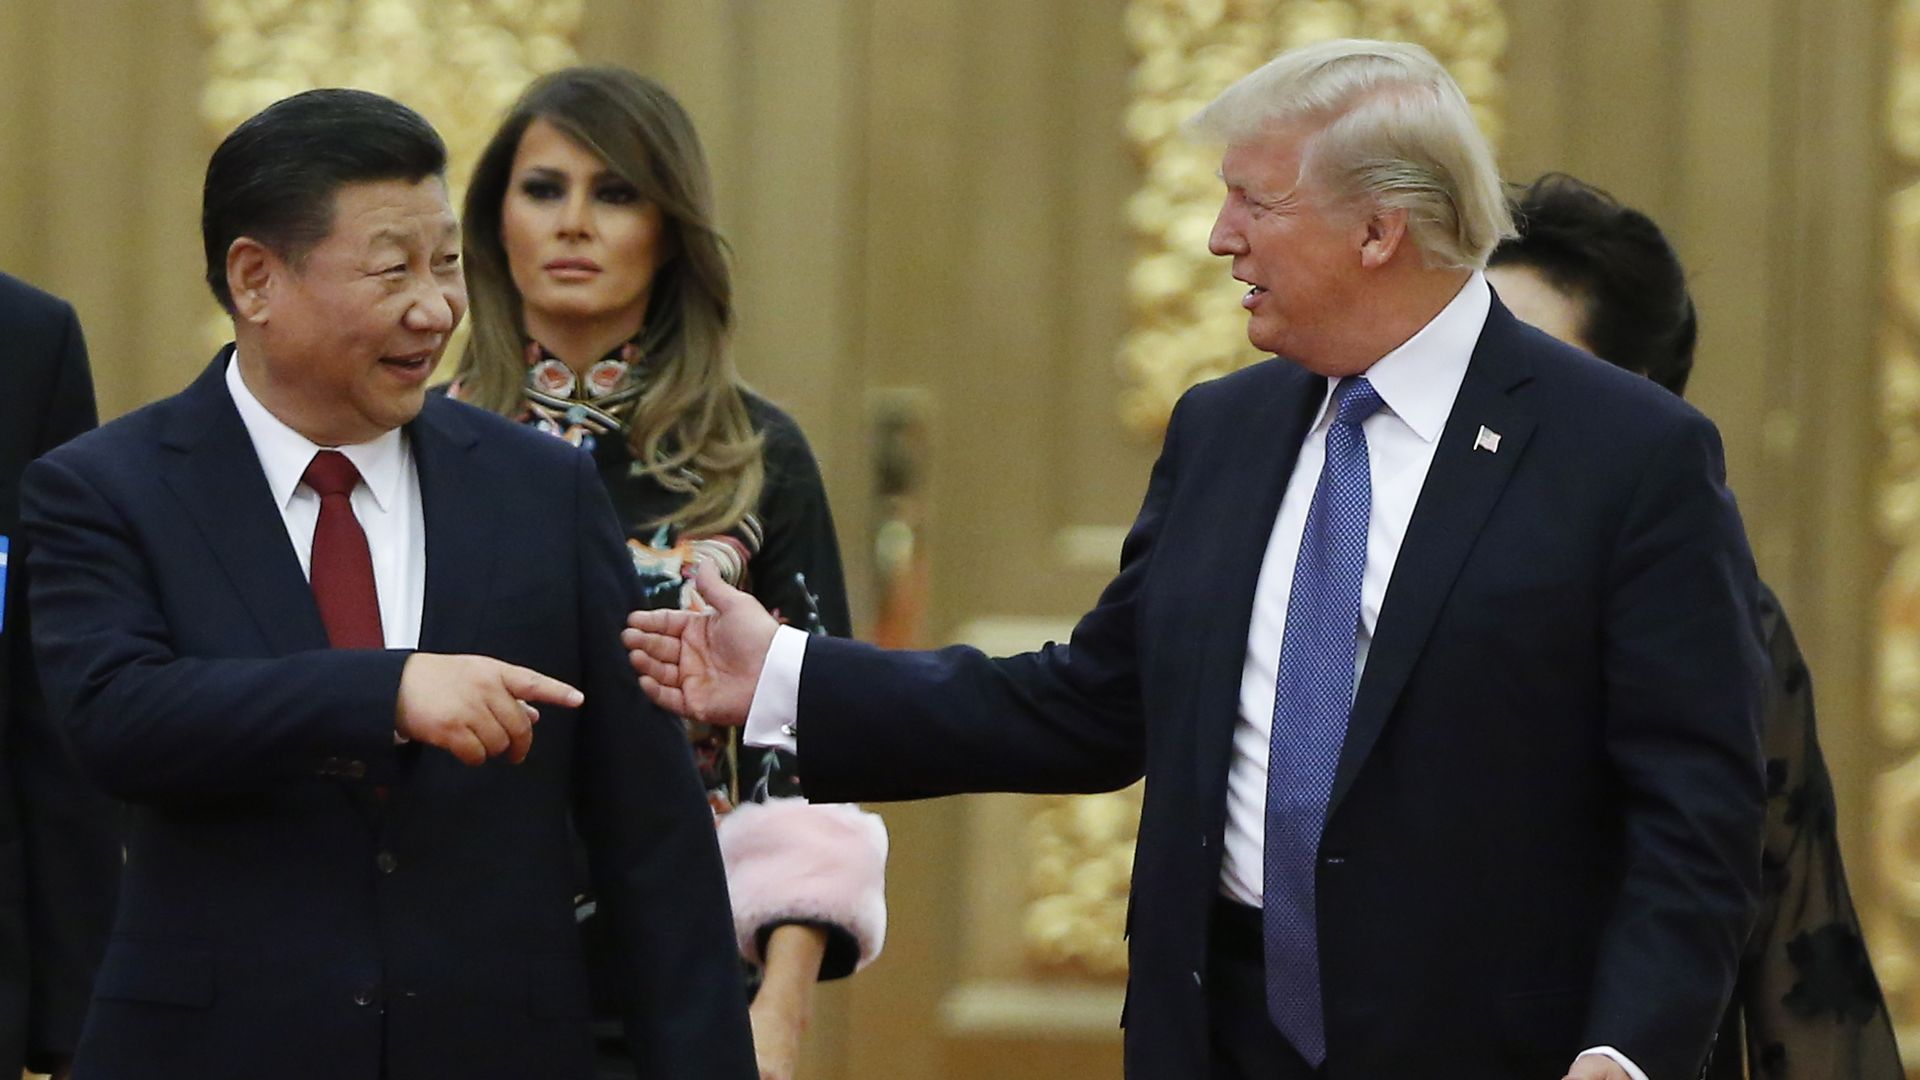 President Trump and Xi Jinping